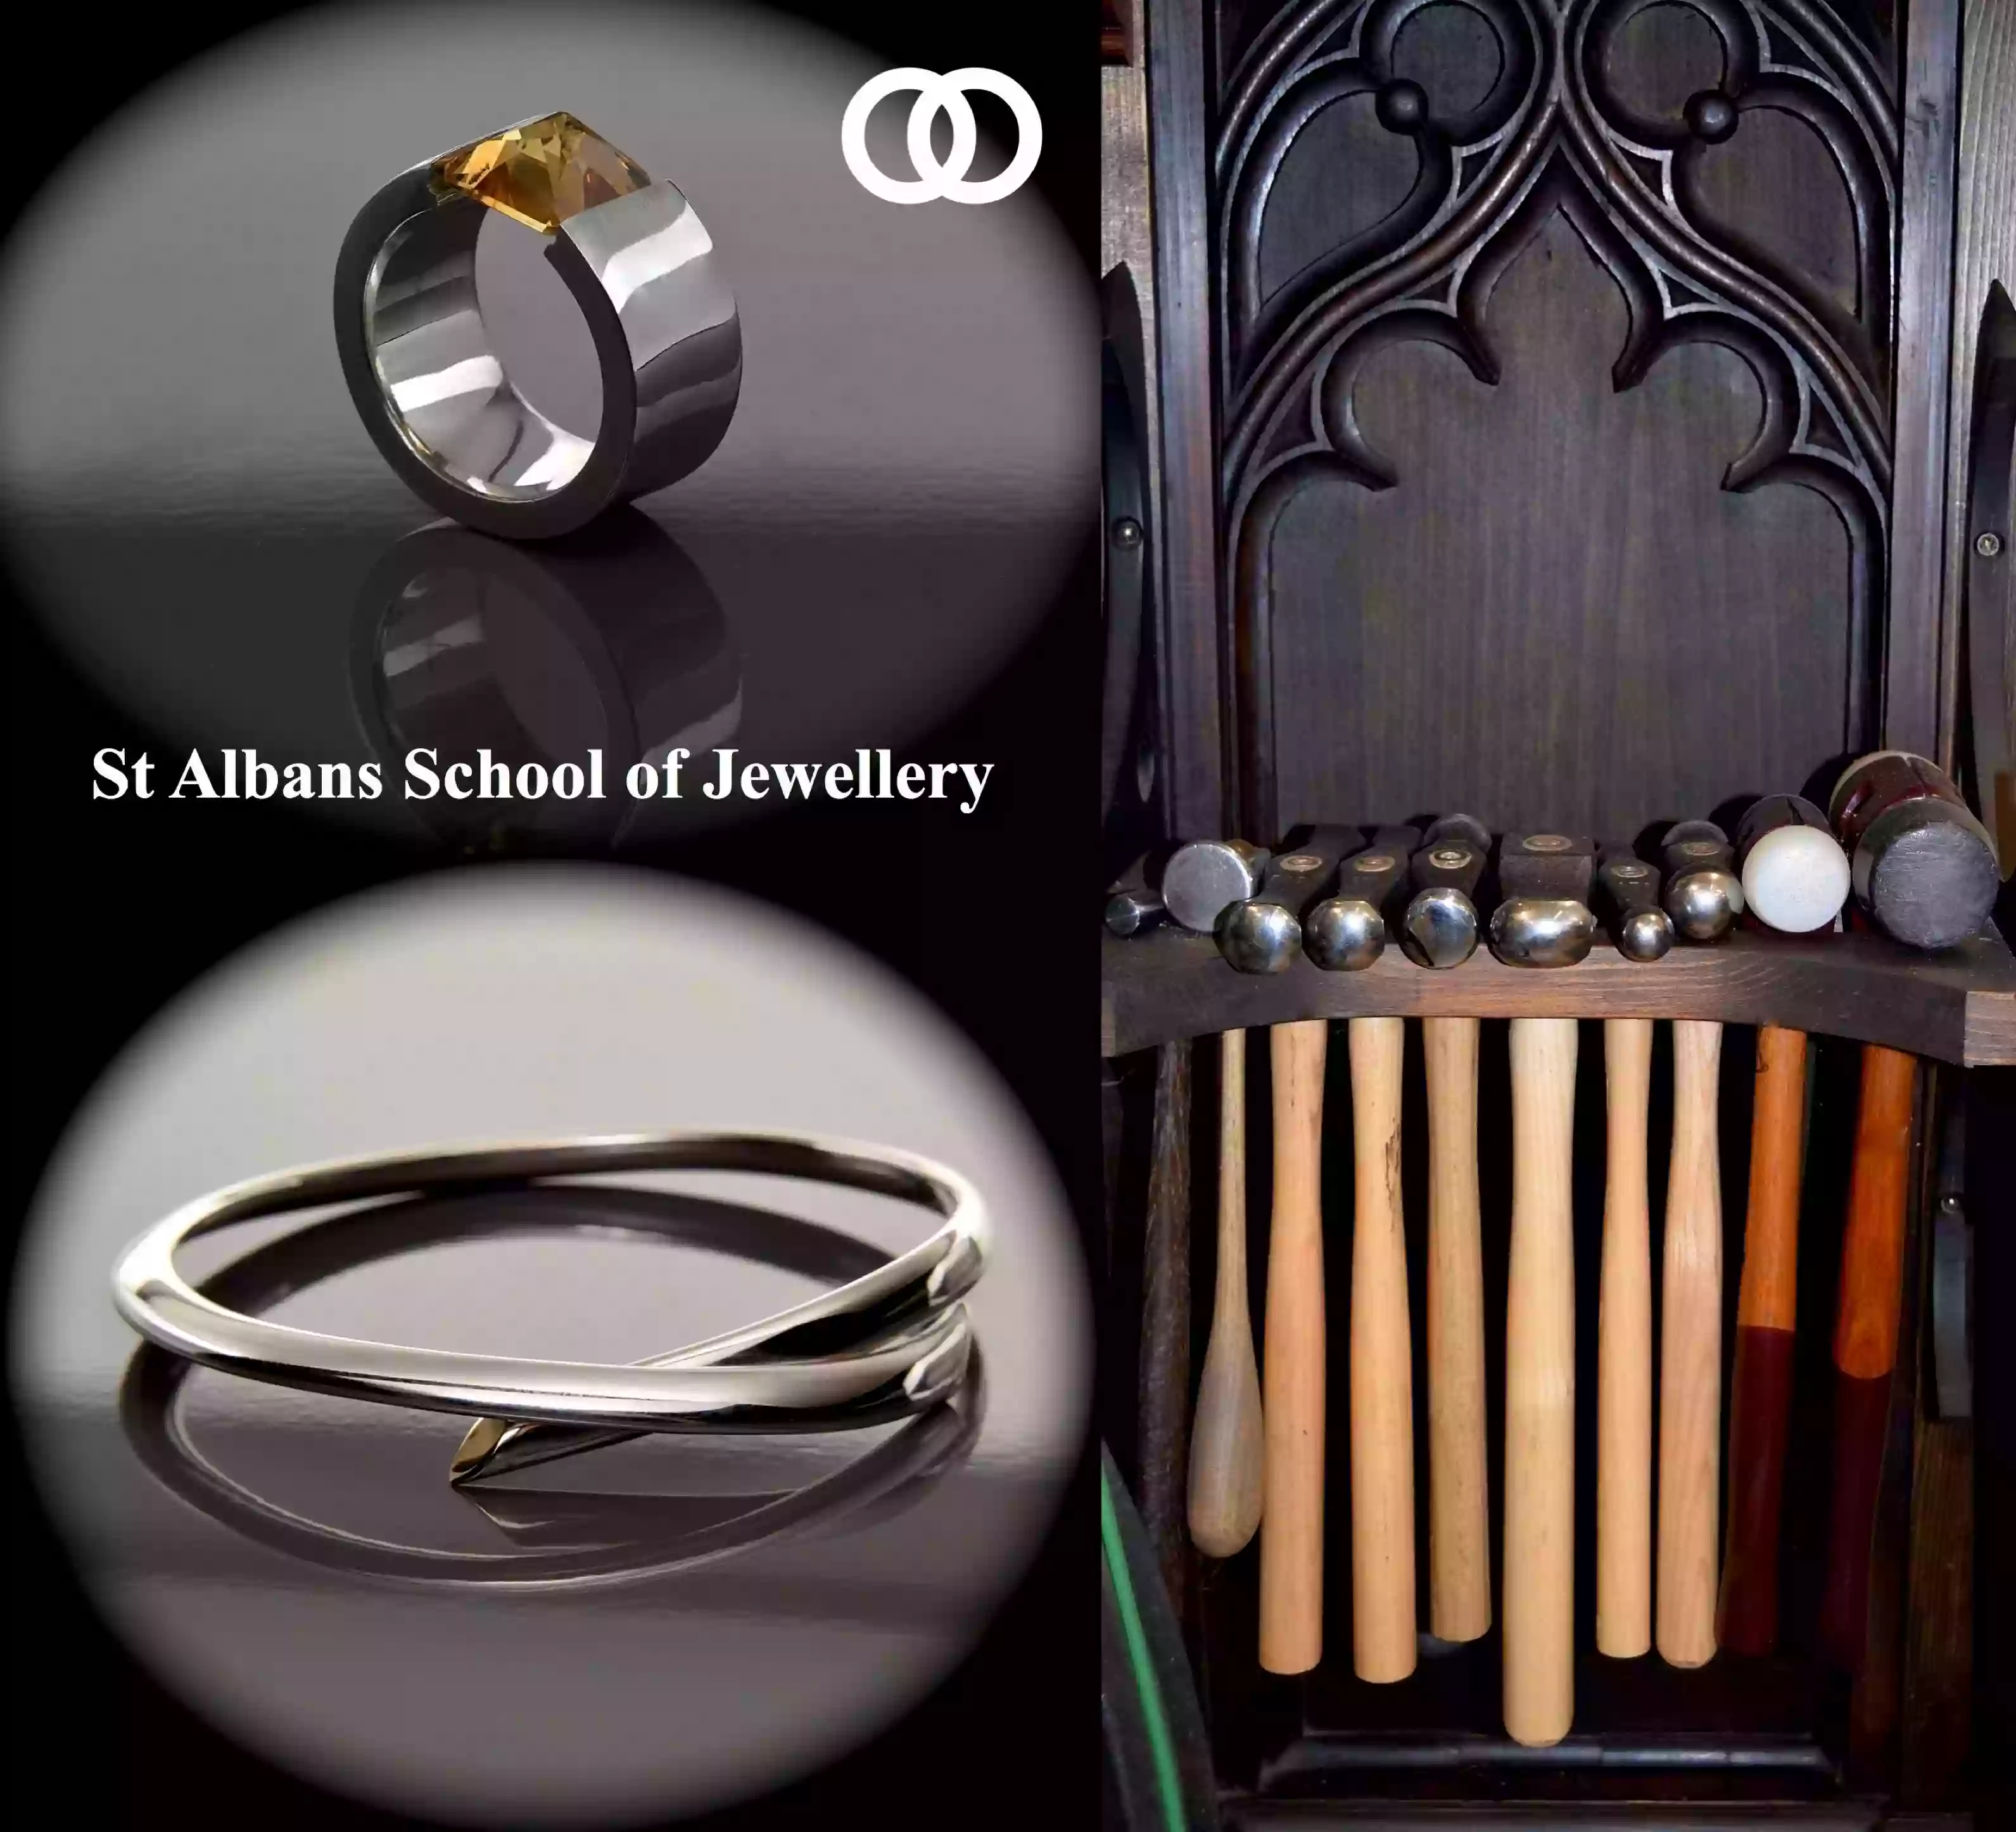 St Albans School of Jewellery